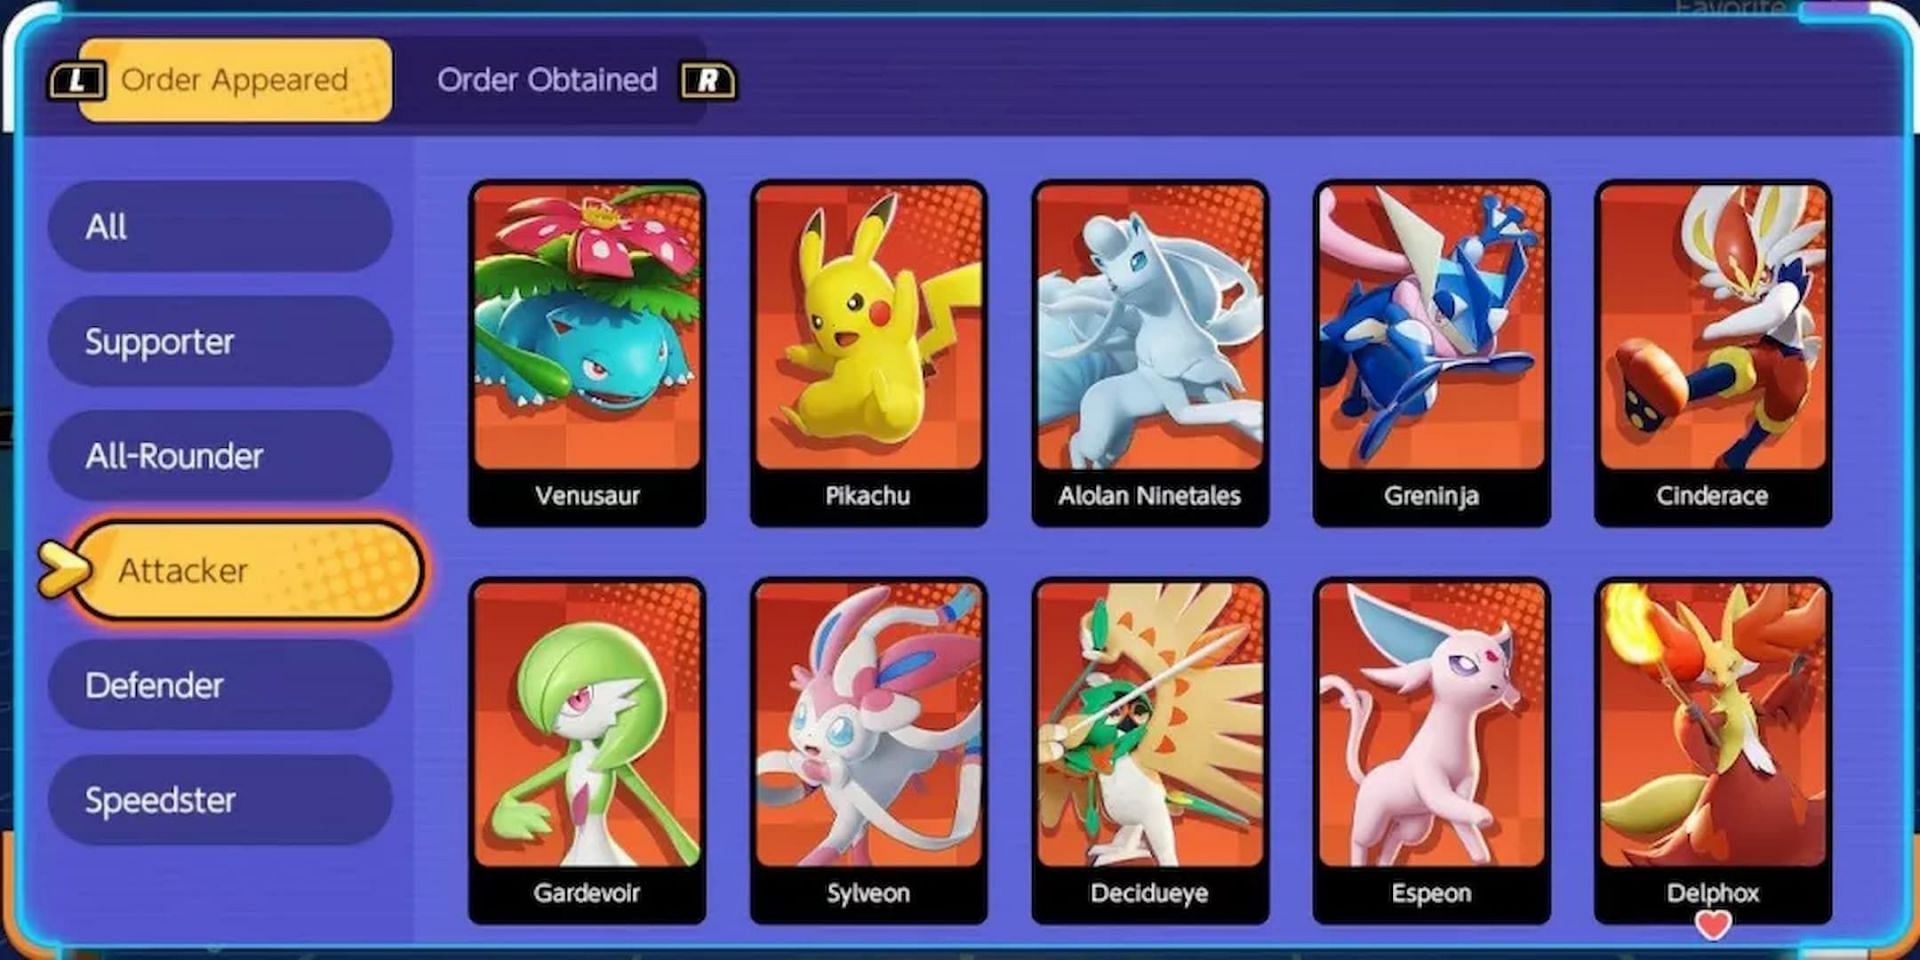 Pokémon Unite Tier and Pokémon List, All-Rounder, Attacker